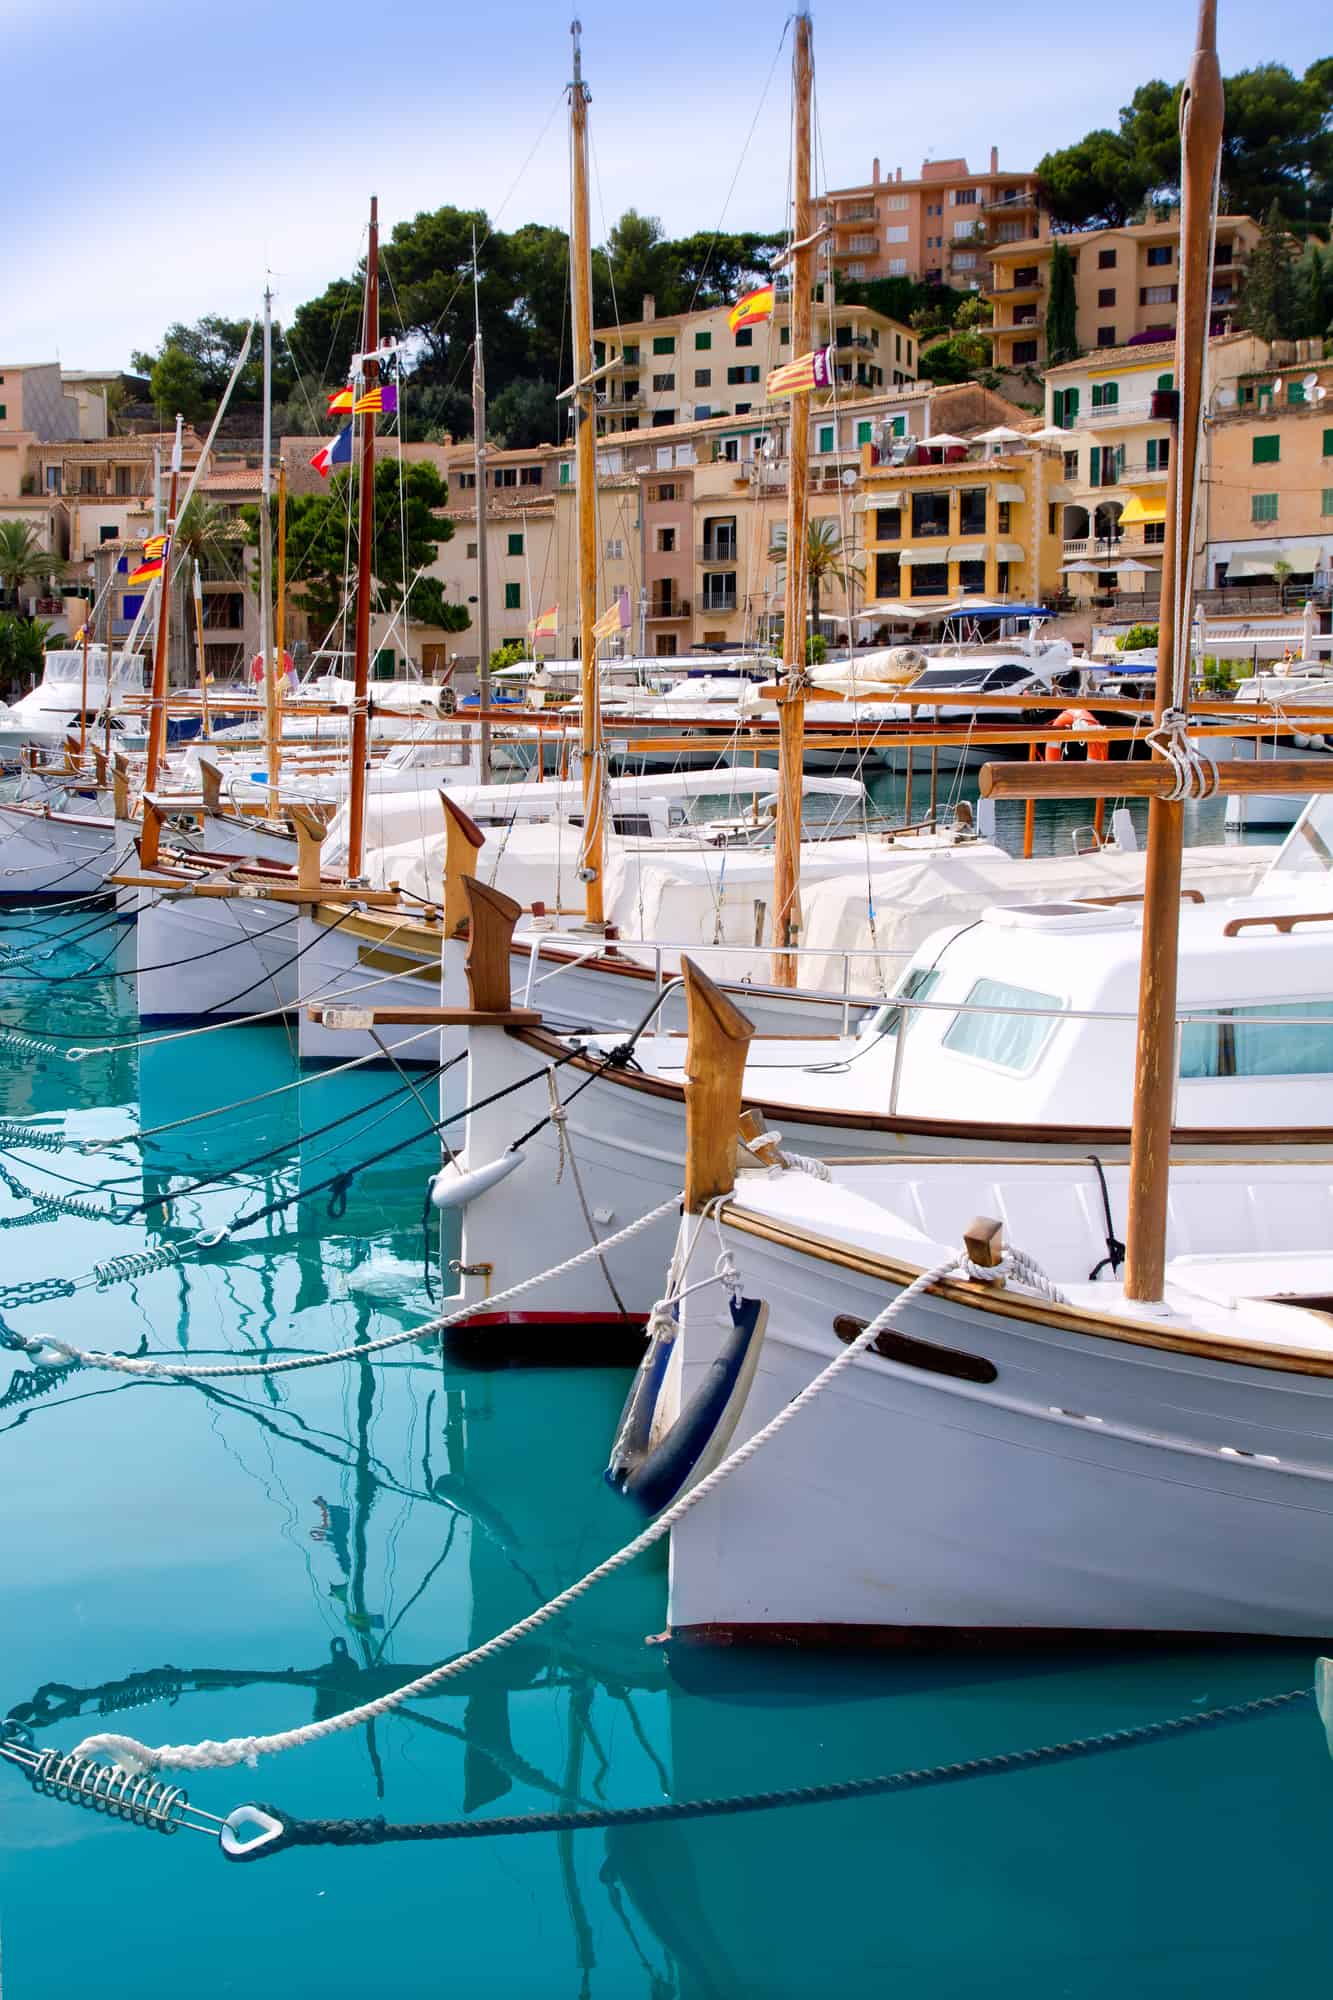 Port de Soller Port of Mallorca with lllaut boats